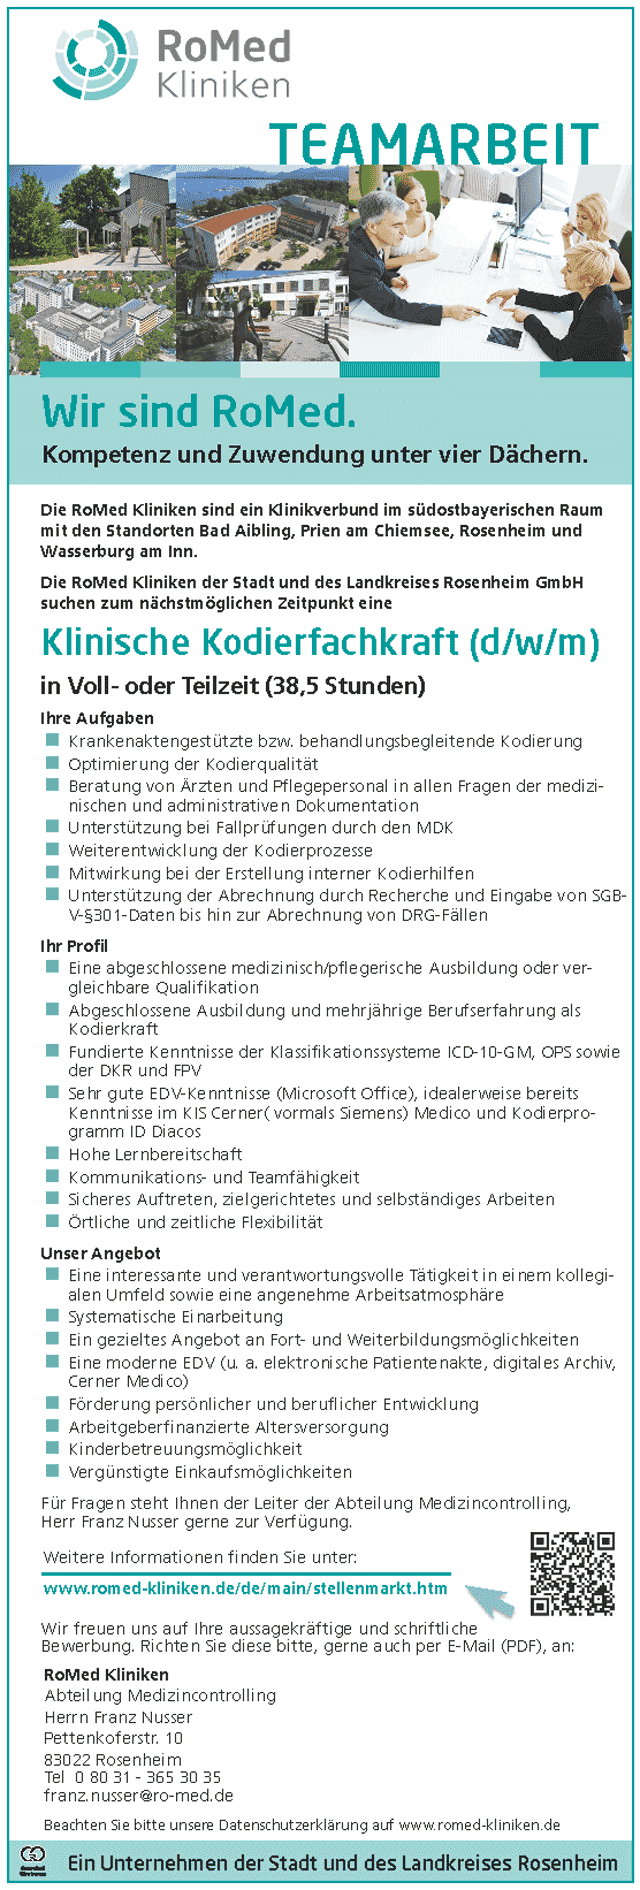 RoMed Kliniken GmbH Rosenheim: Klinische Kodierfachkraft (d/w/m)